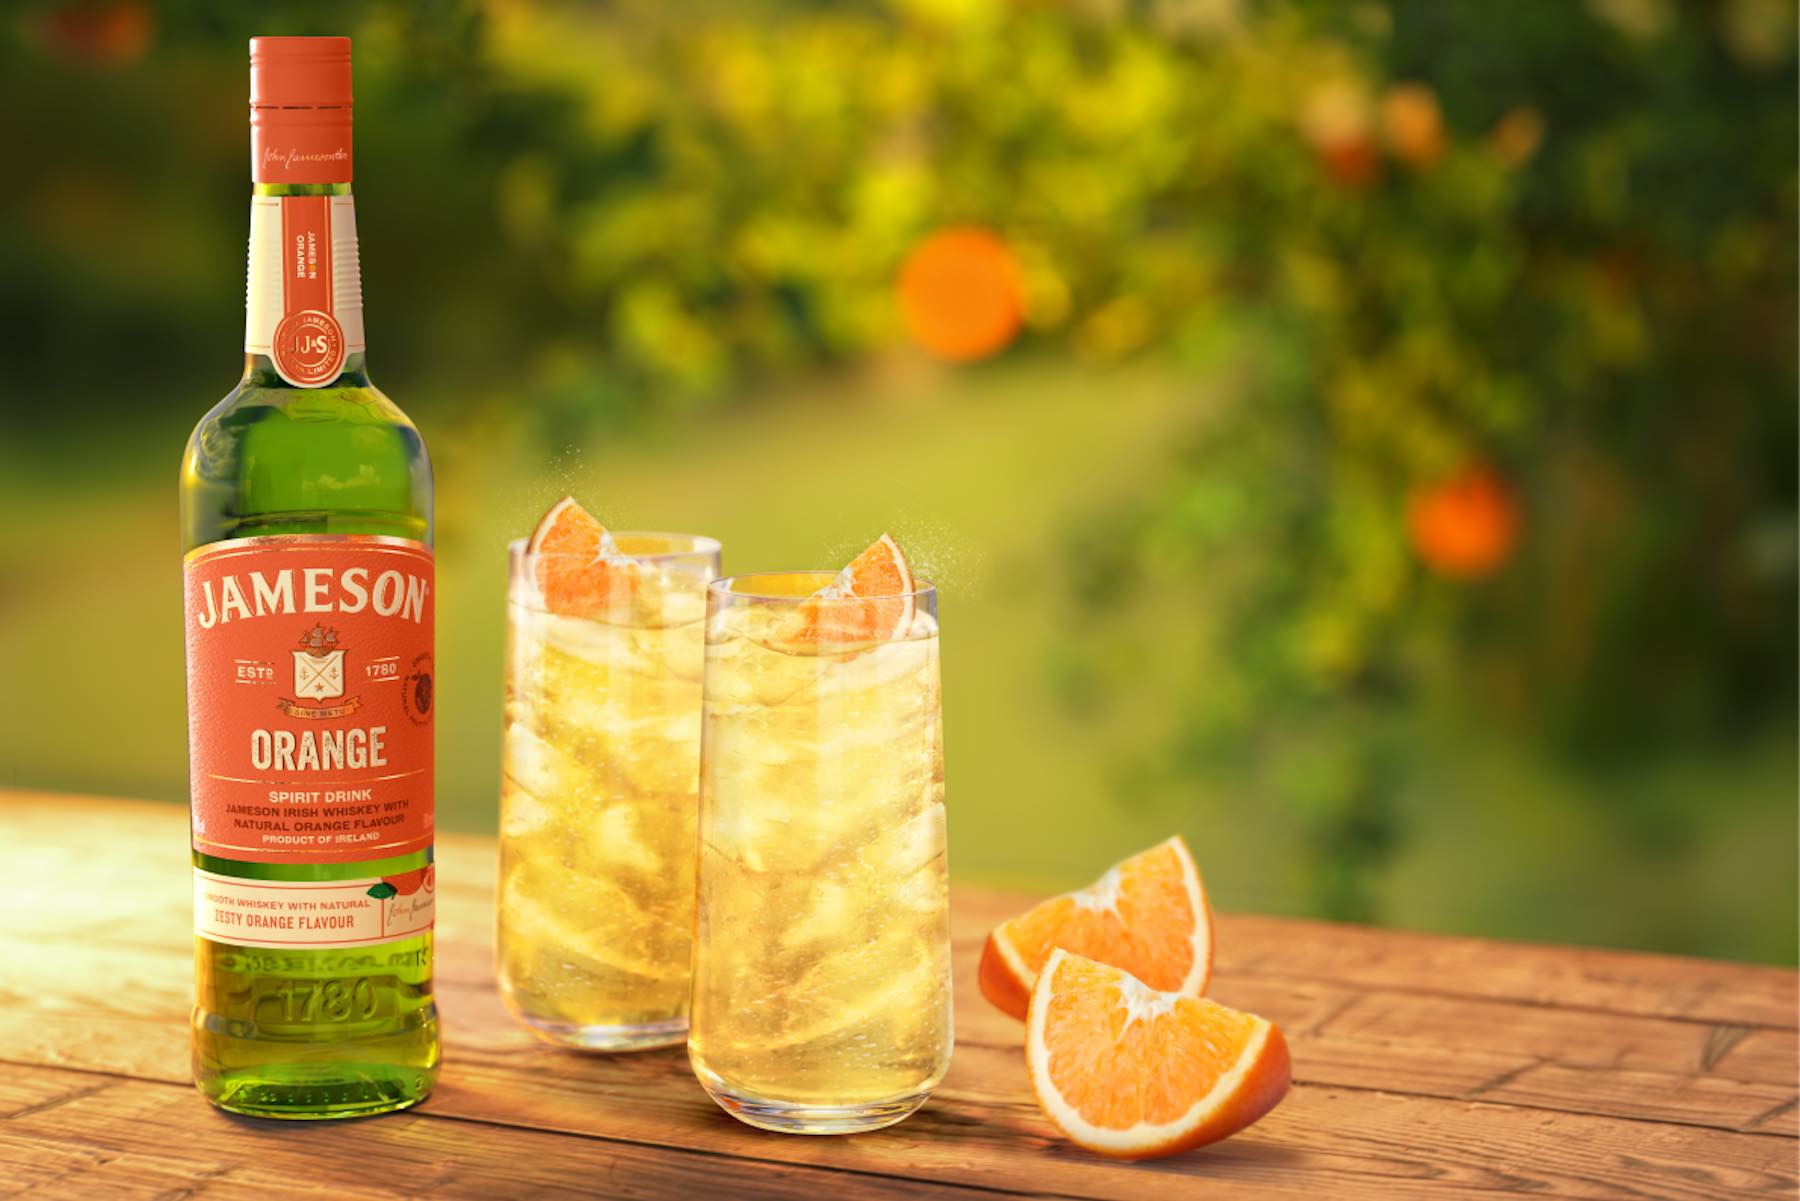 Jameson Orange, A New Flavoured Irish Whiskey Spirit